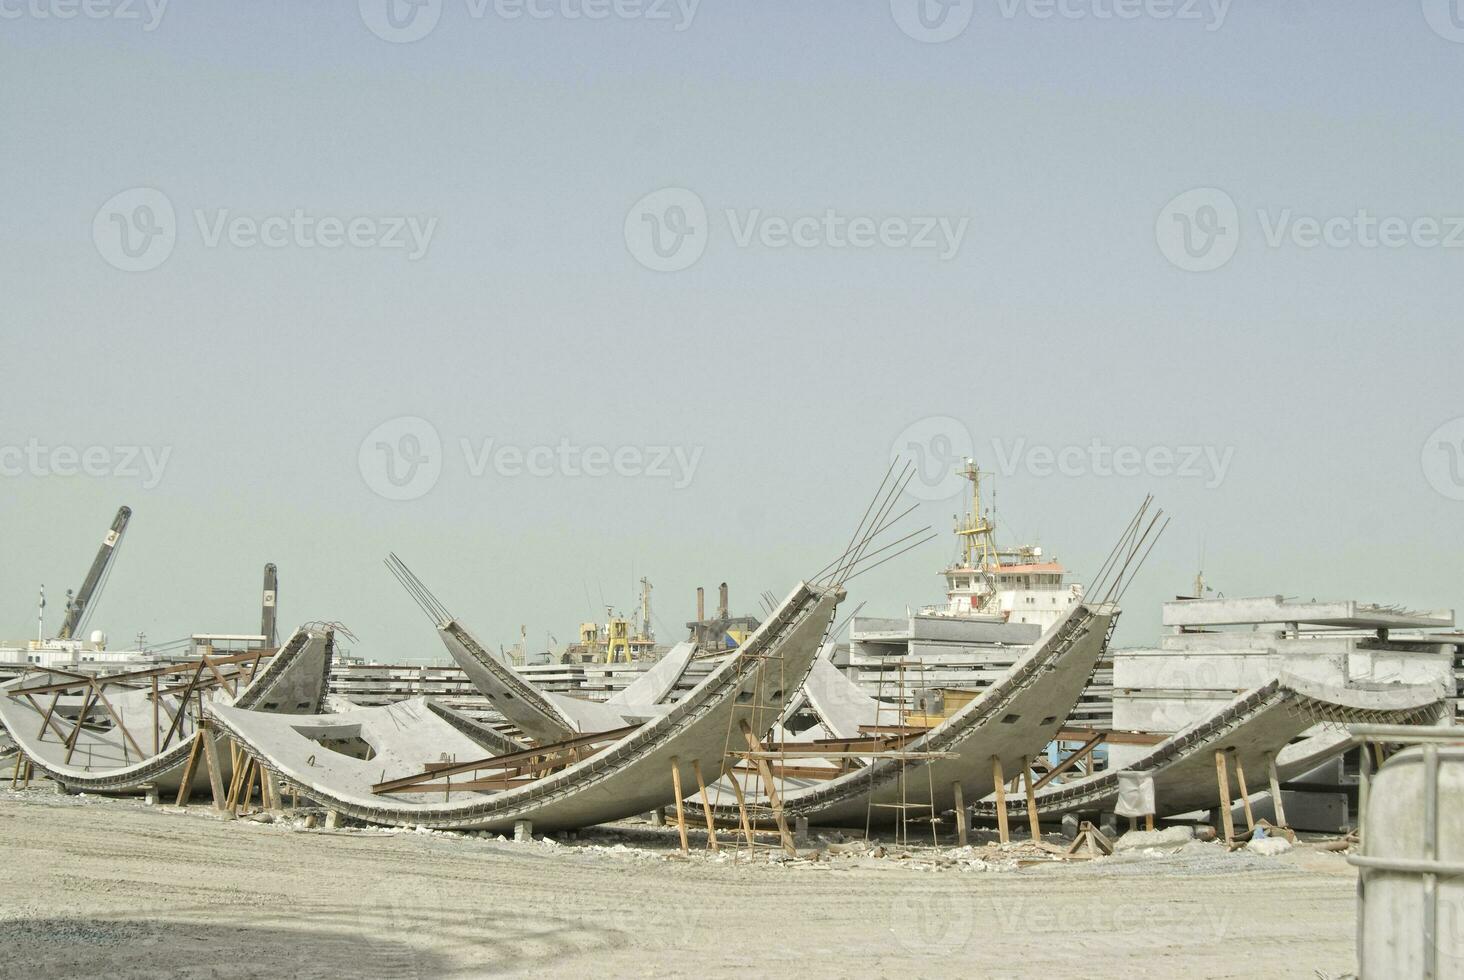 Construction site with cranes.Biton constructions photo